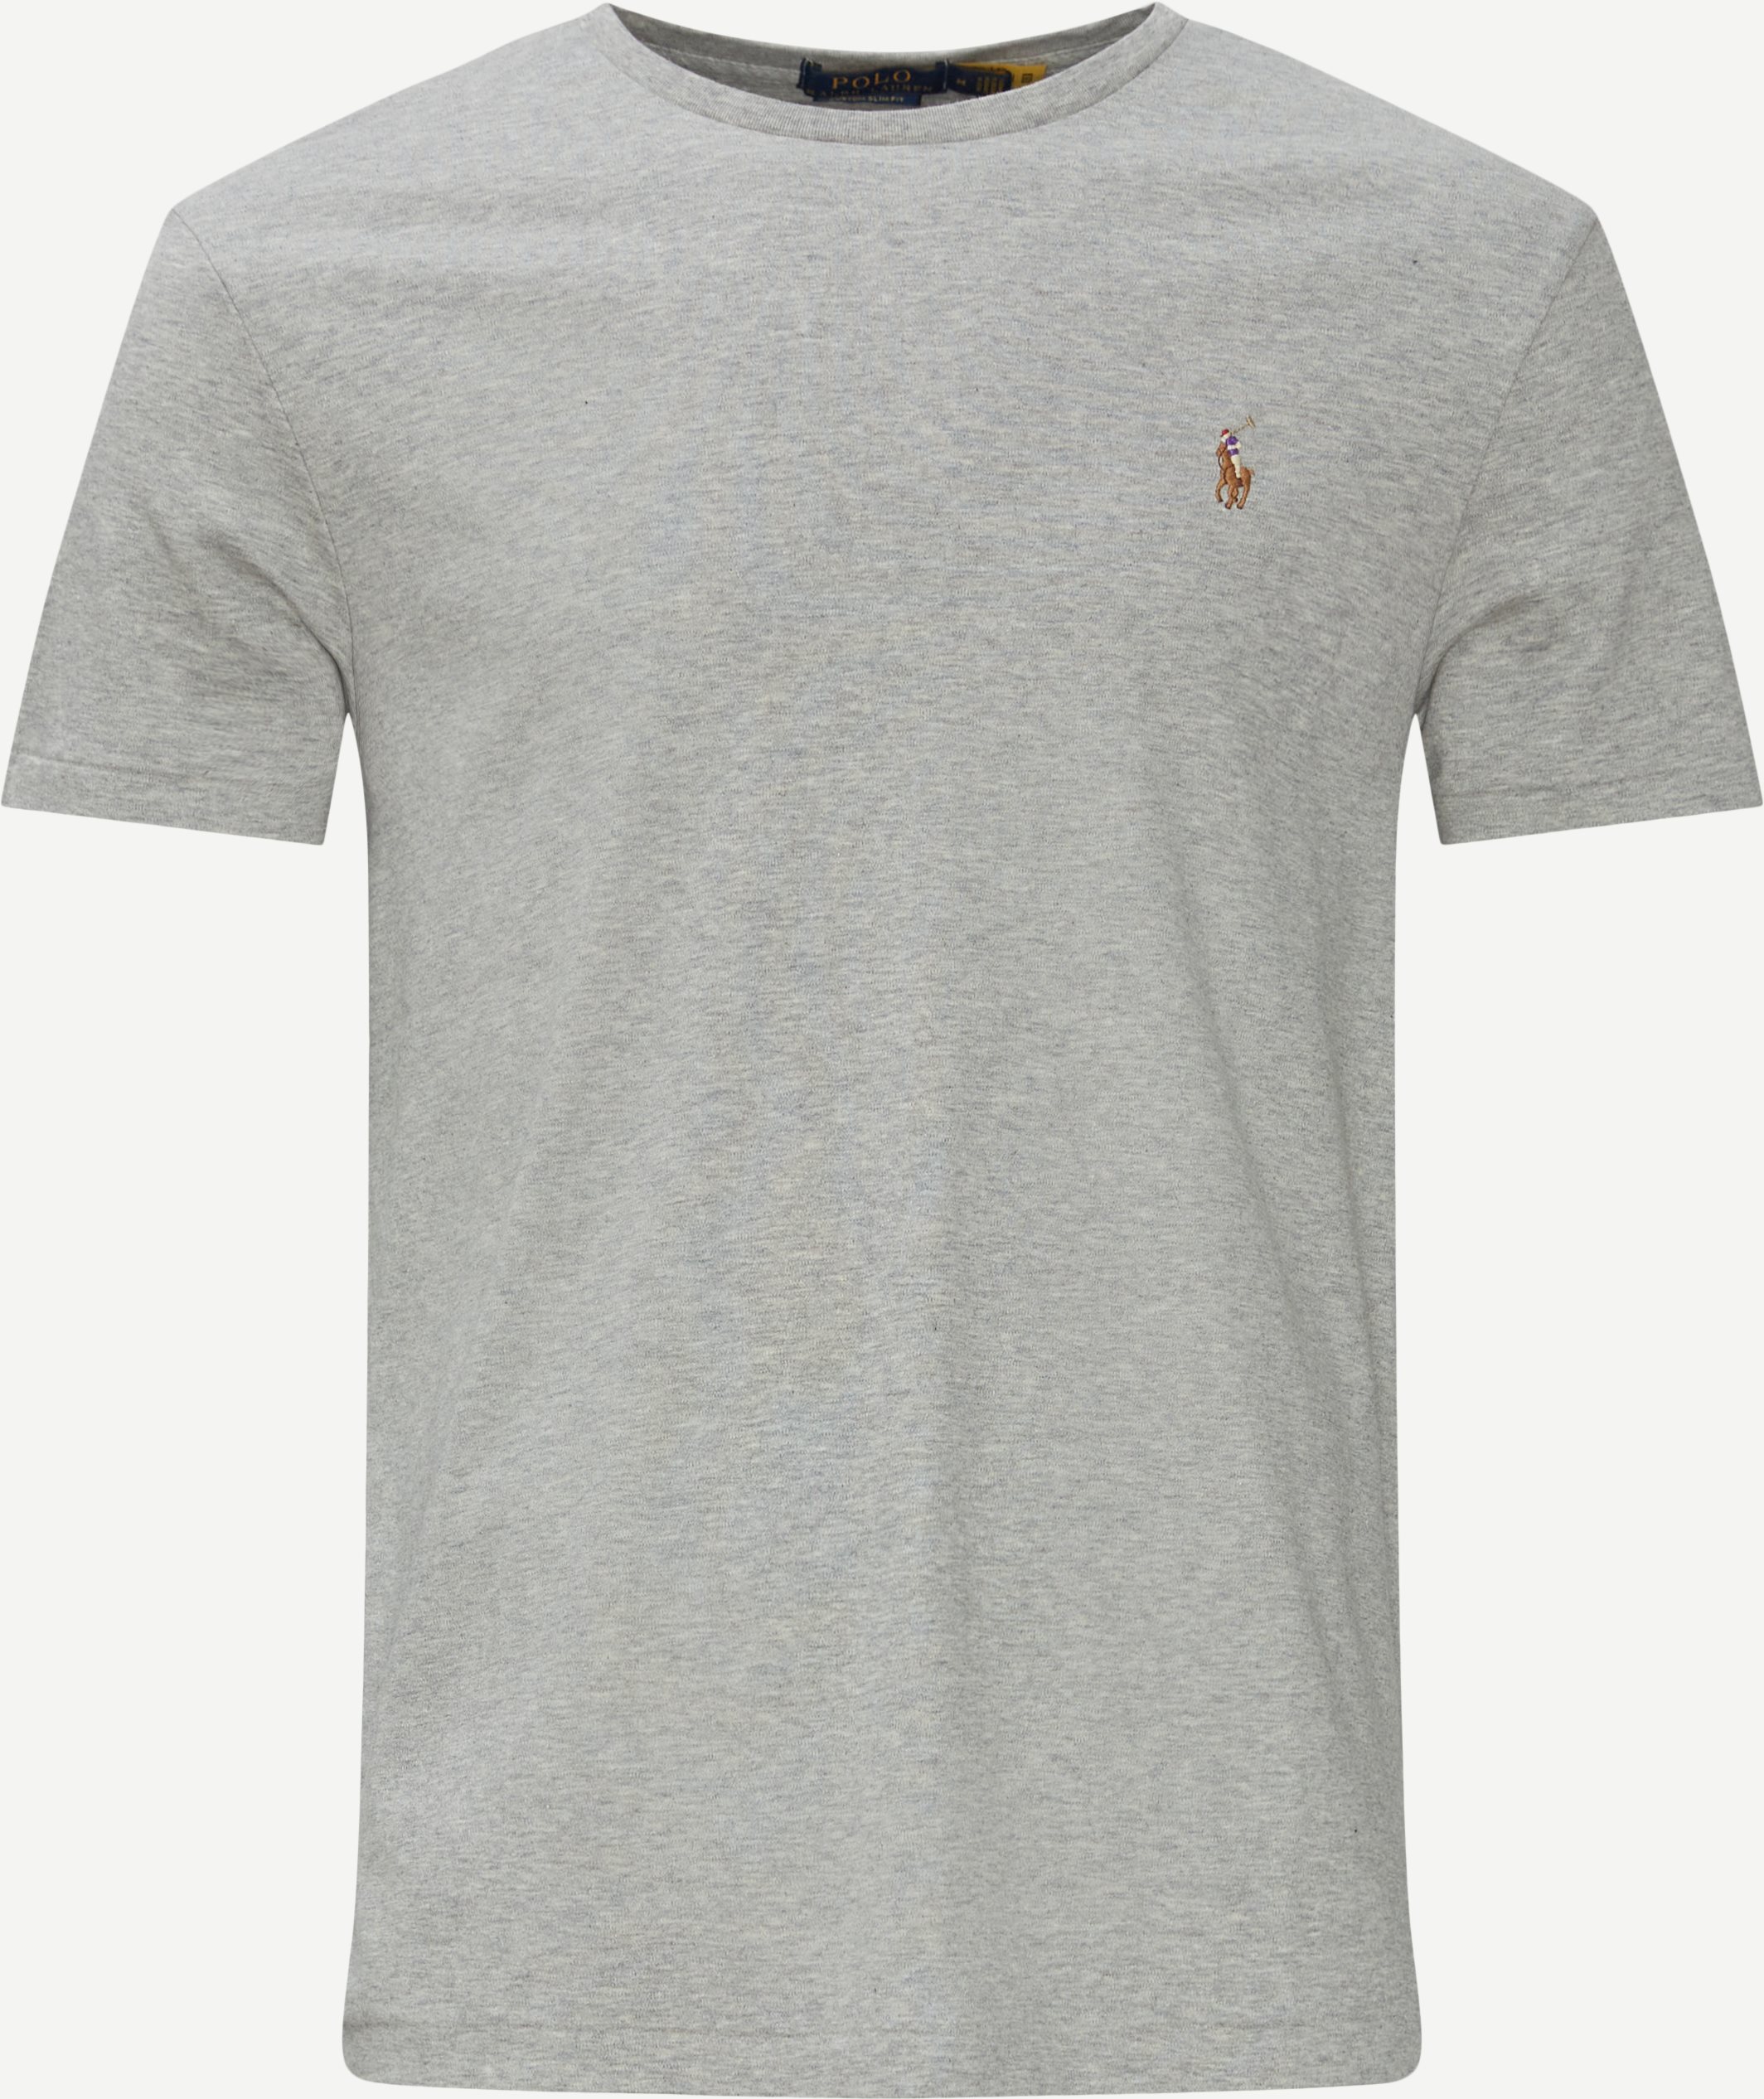 T-shirts - Regular slim fit - Grey